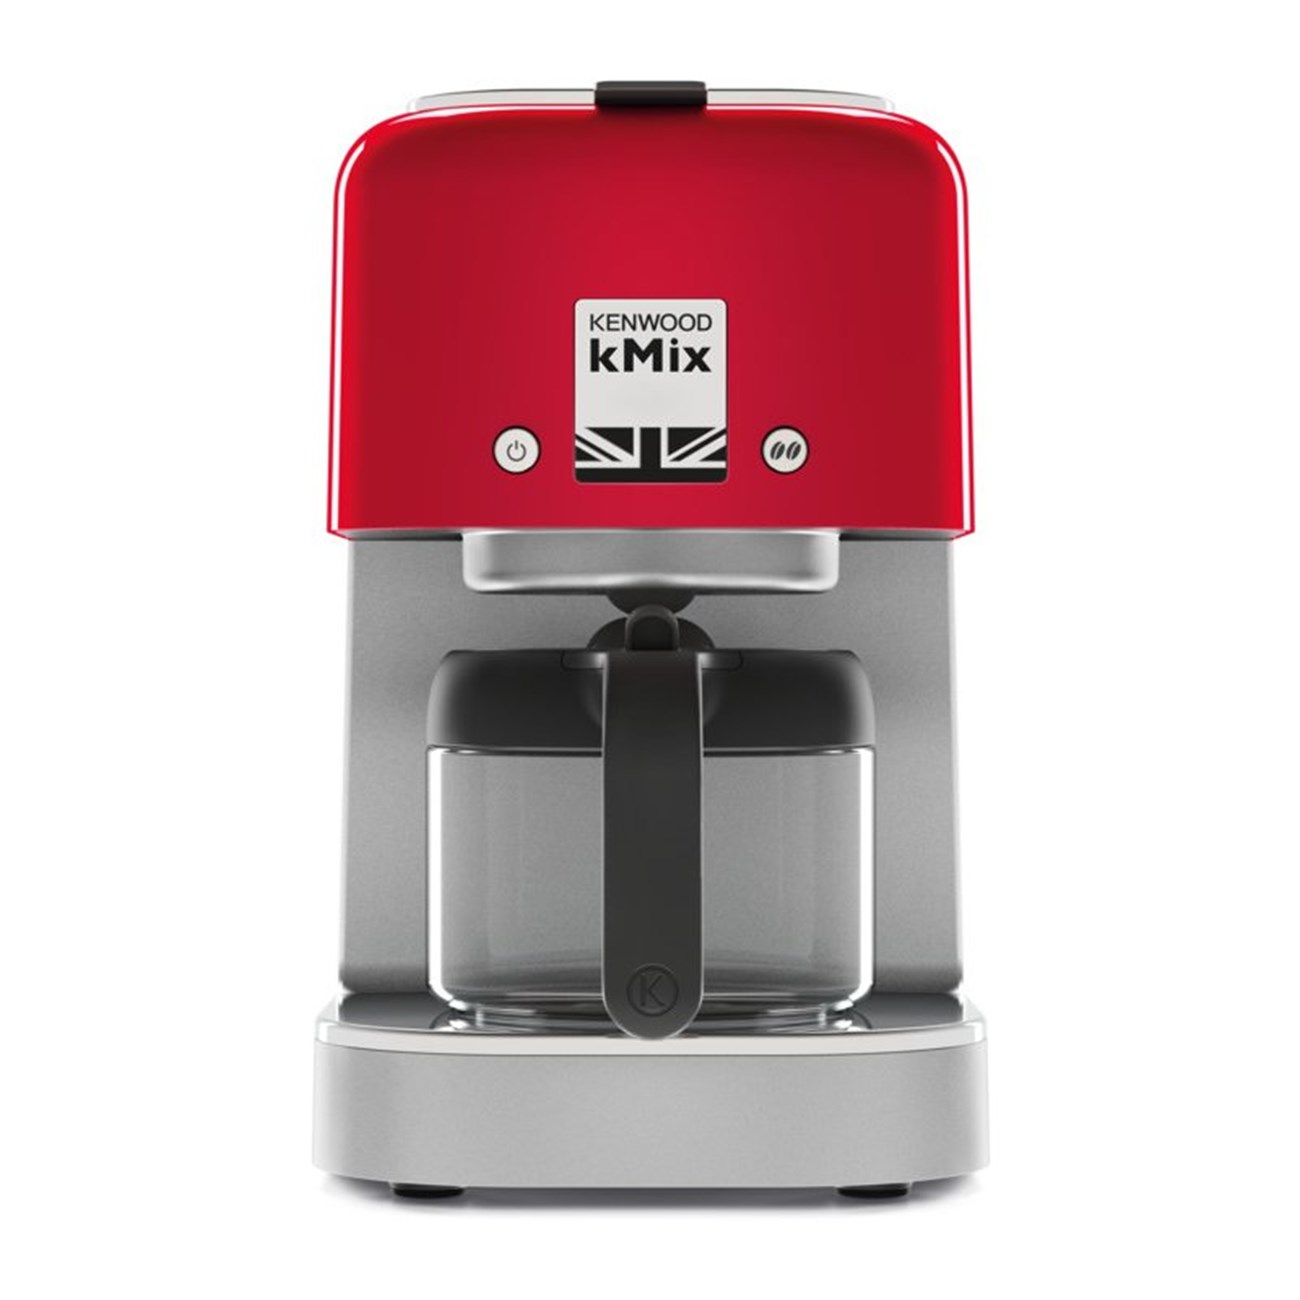 Kenwood COX750RD kMix Filtre Kahve Makinası - Kırmızı